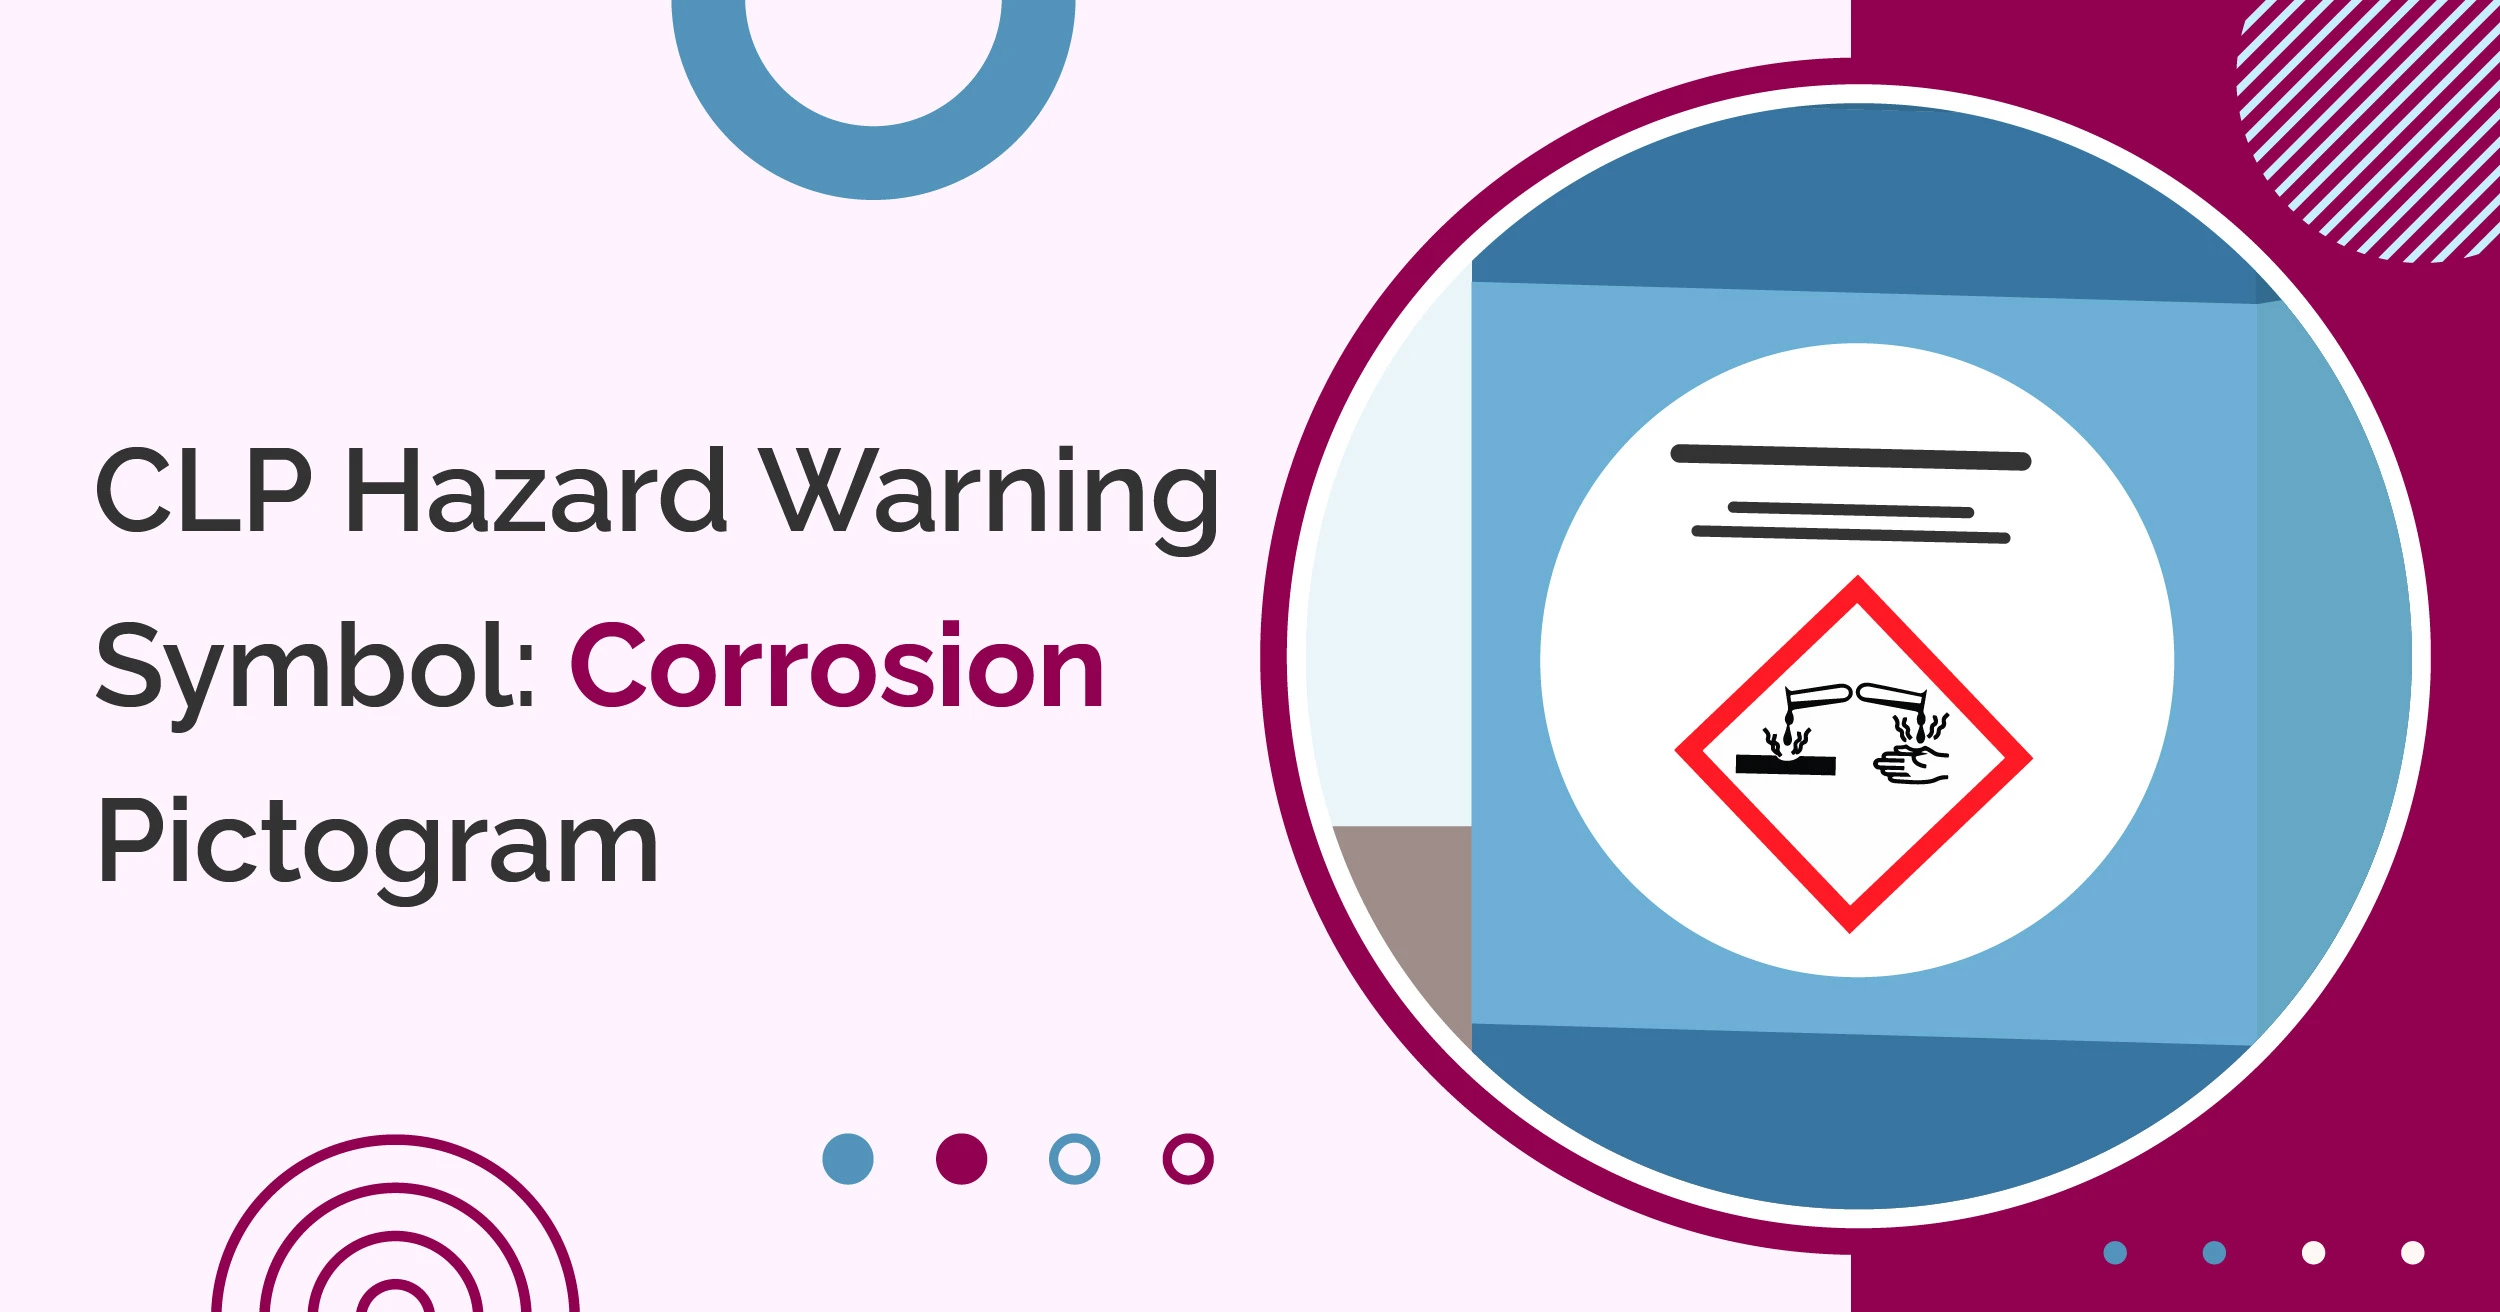 CLP Hazard Warning Symbol: Corrosion Pictogram